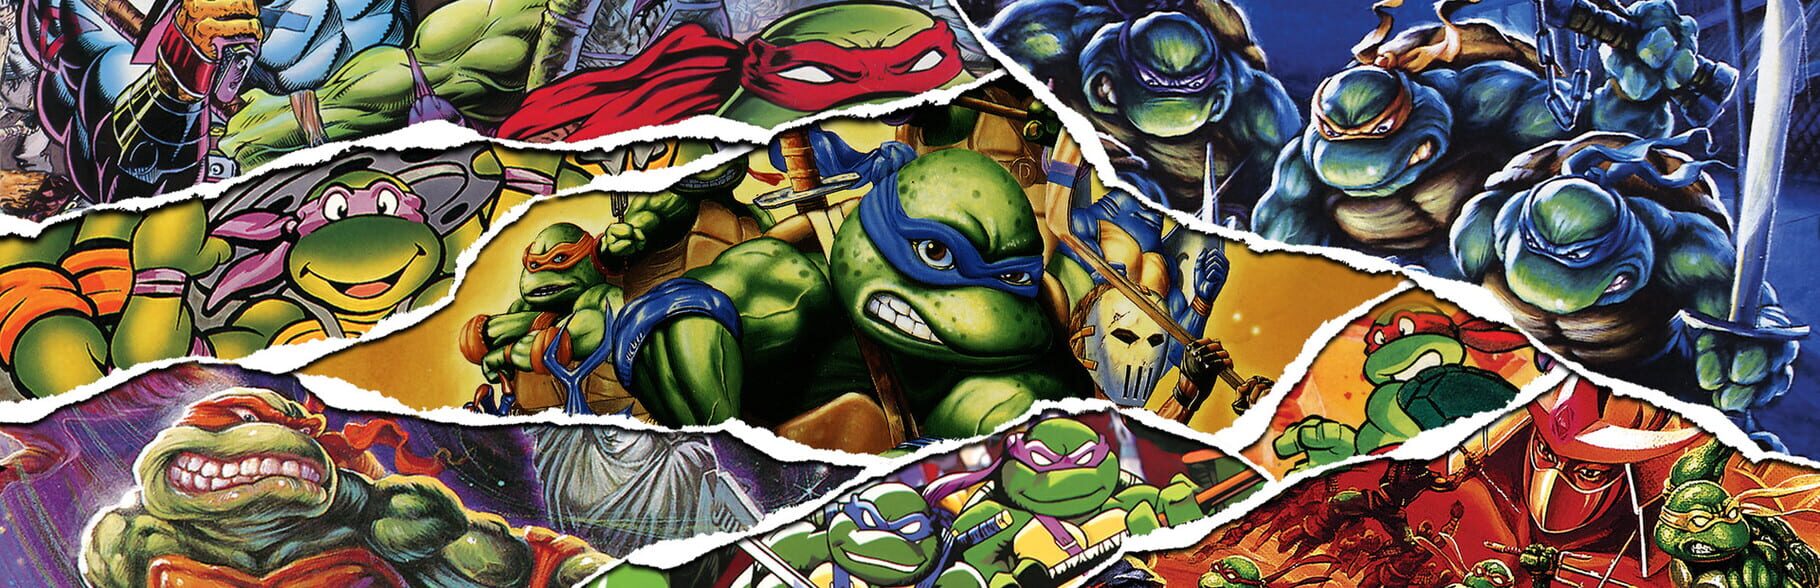 Arte - Teenage Mutant Ninja Turtles: The Cowabunga Collection